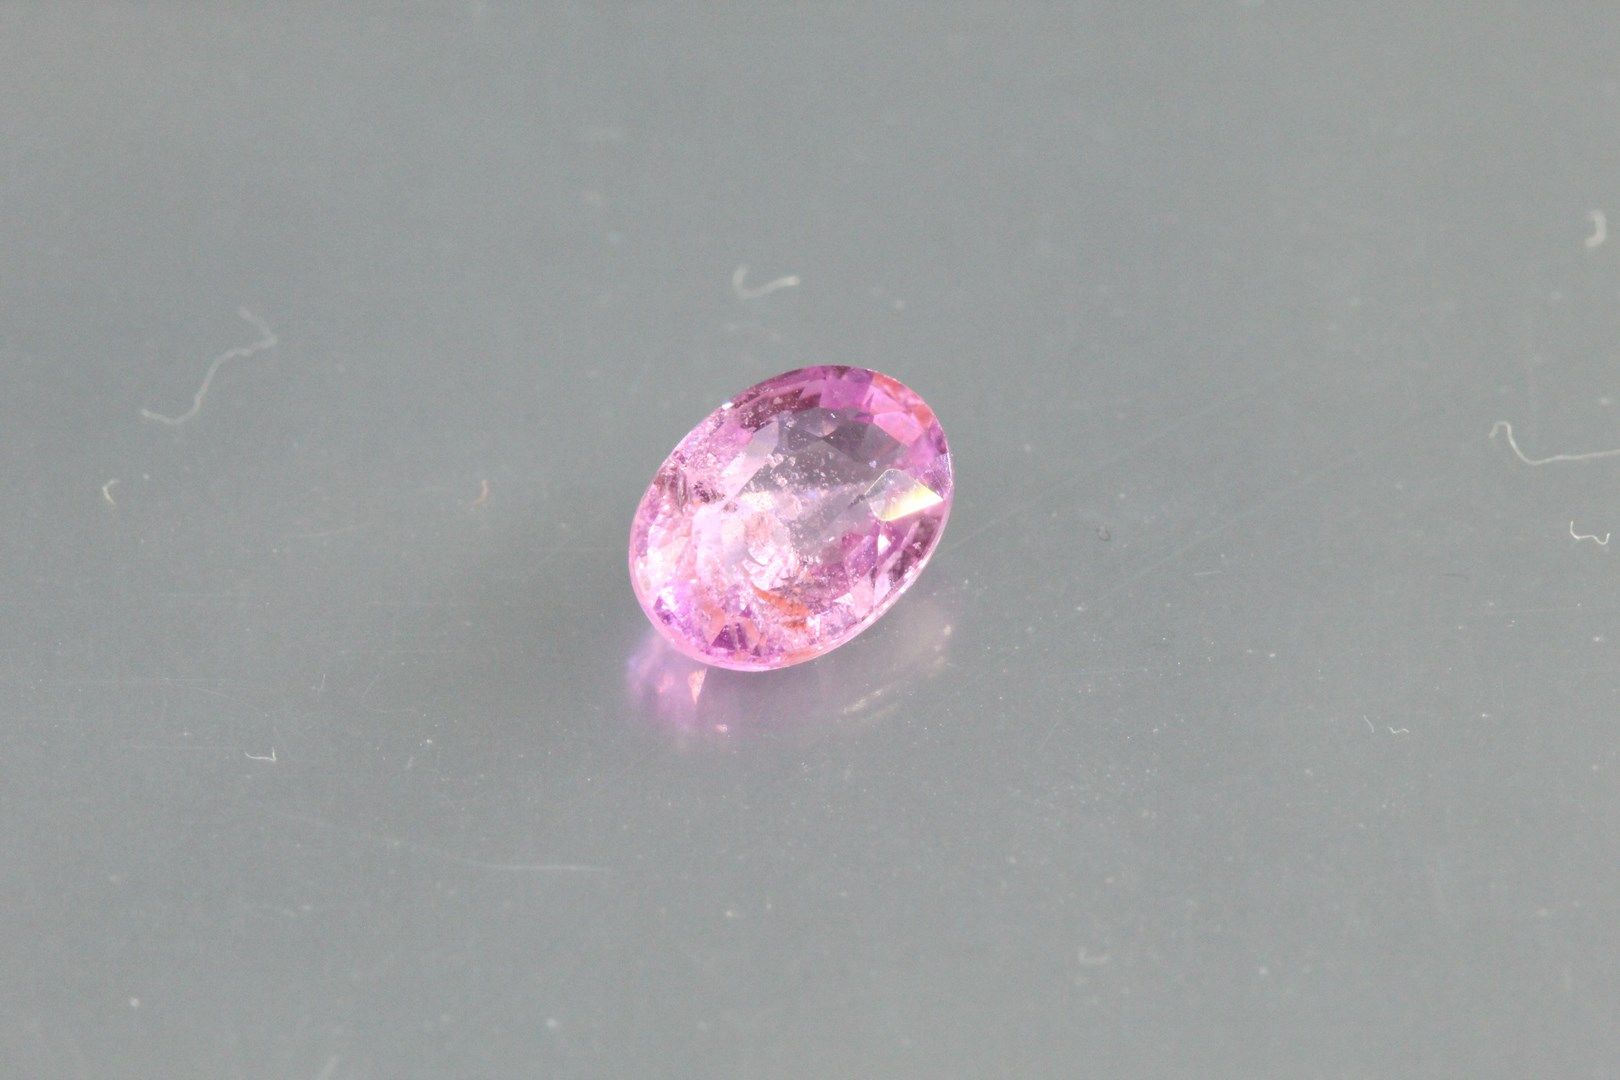 Null Zafiro rosa ovalado sobre papel.

Peso: 1,17 cts. 

Plano de descascarillad&hellip;